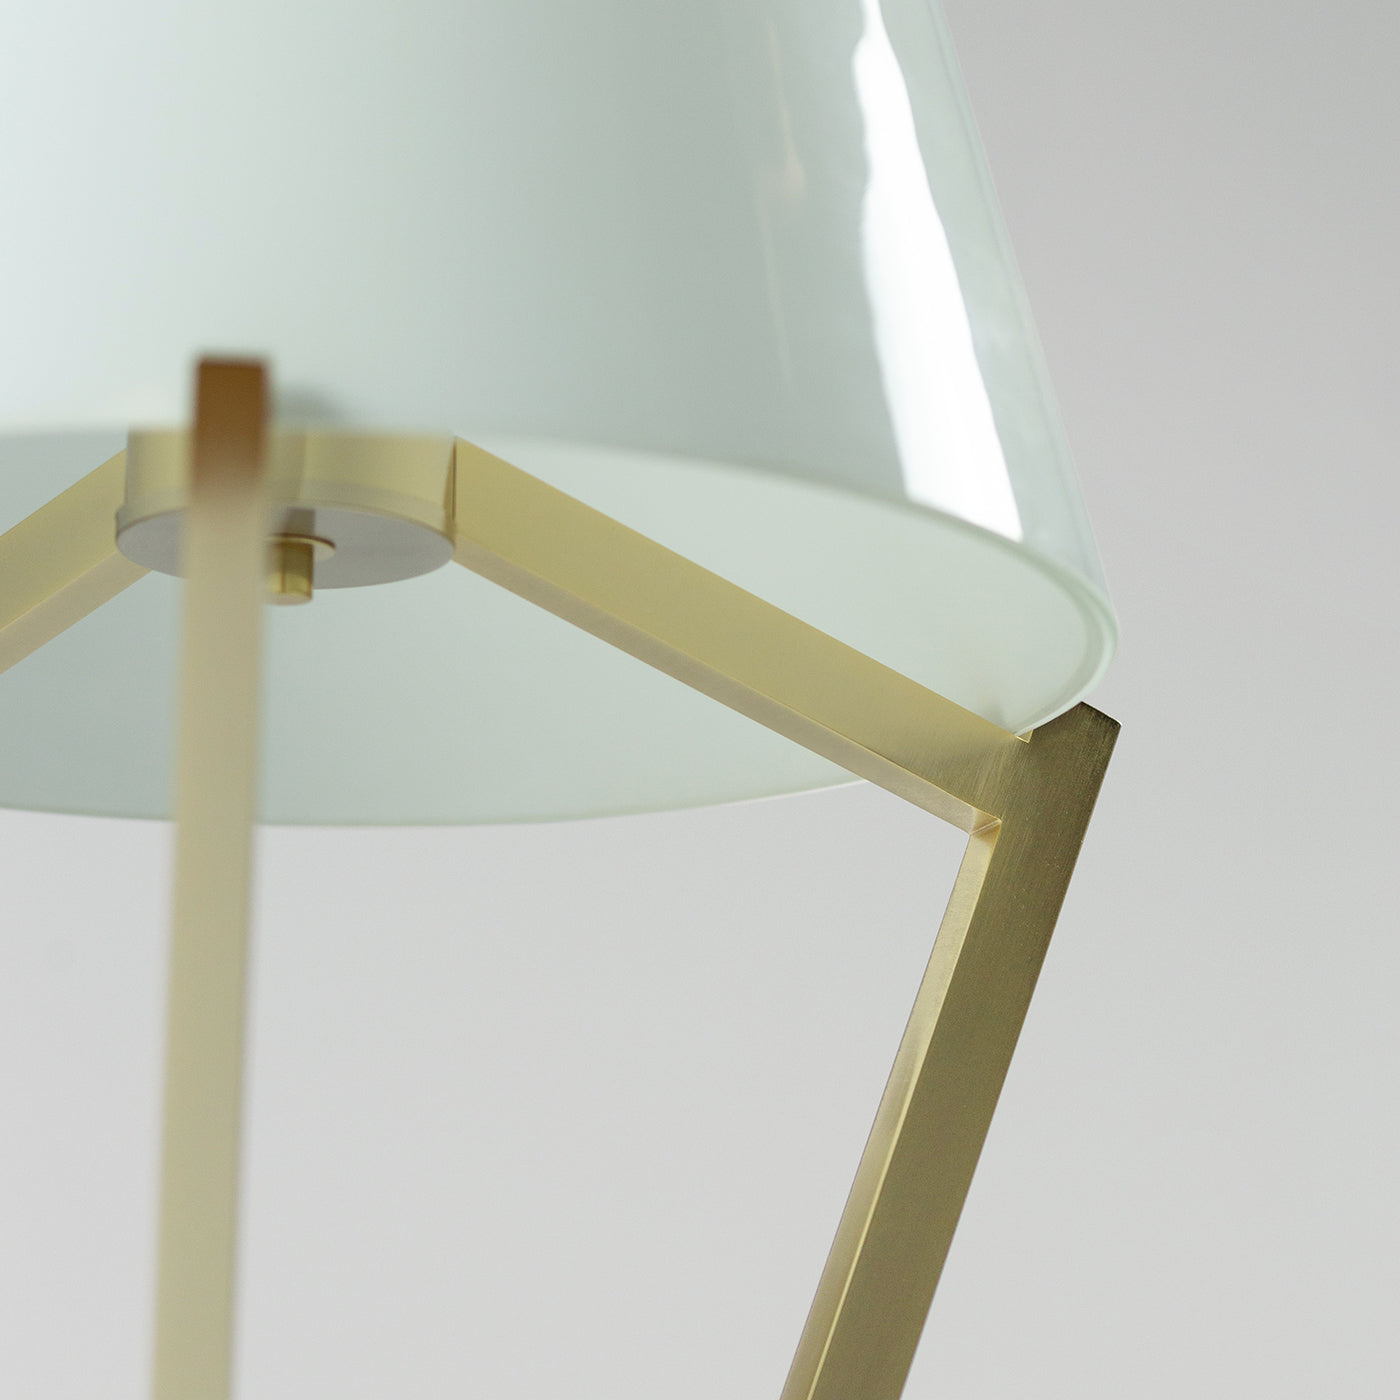 Zena Table Lamp #1 - Alternative view 1